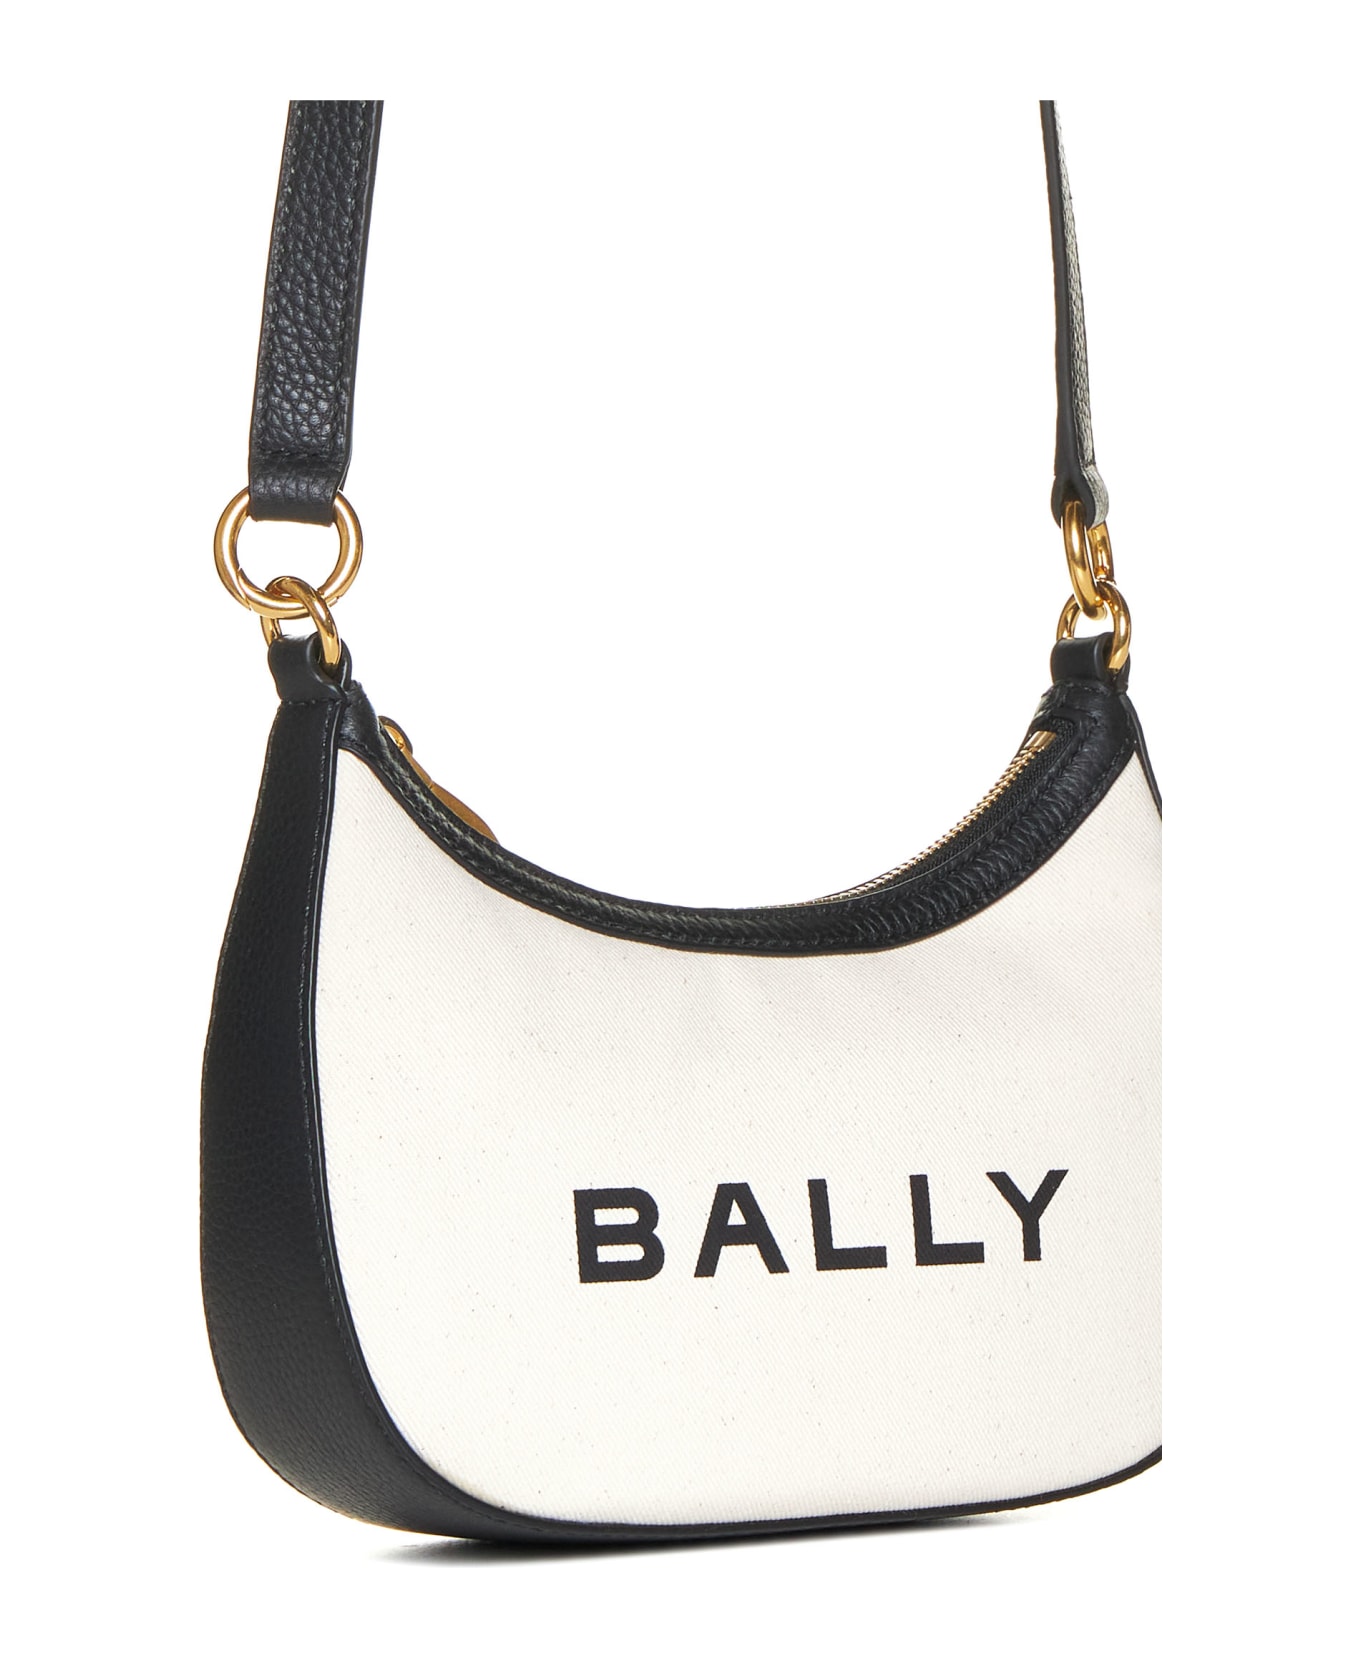 Bally Shoulder Bag - Natural/black+oro